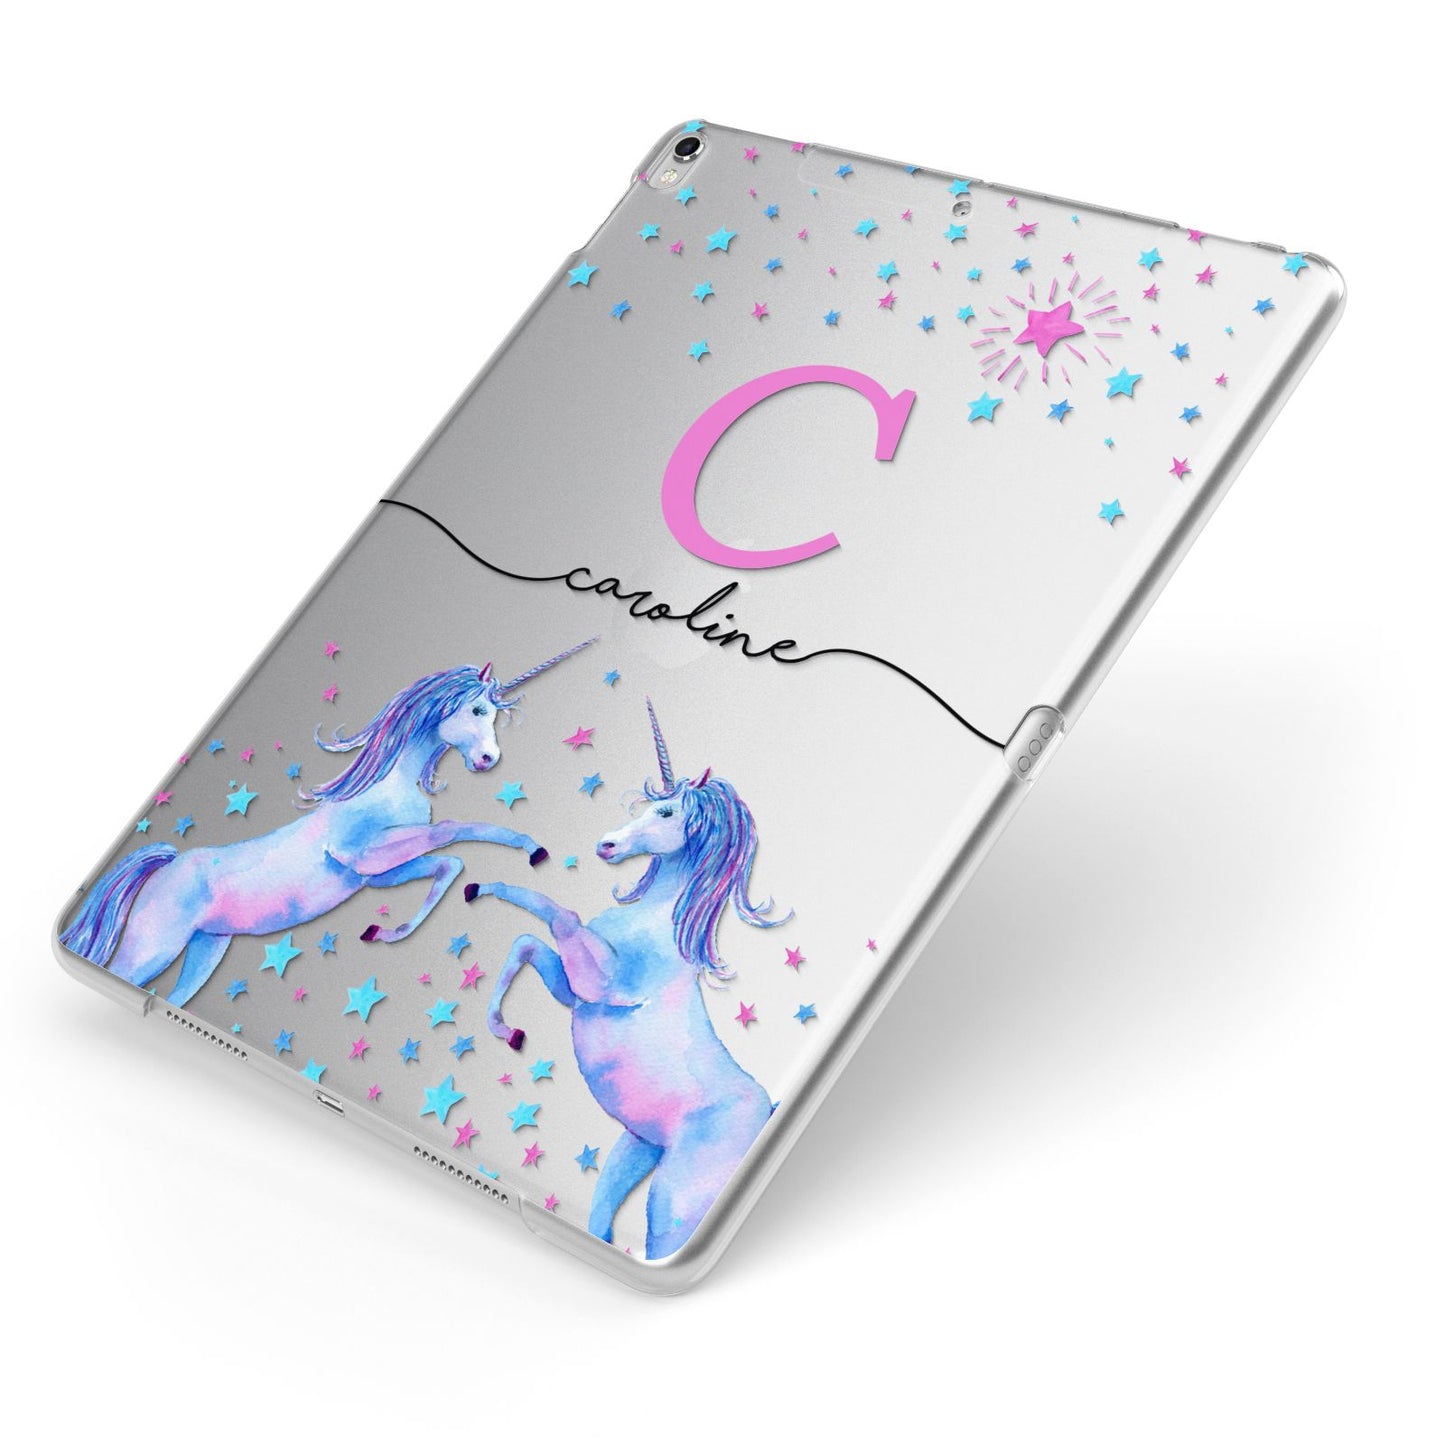 Personalised Unicorn Apple iPad Case on Silver iPad Side View